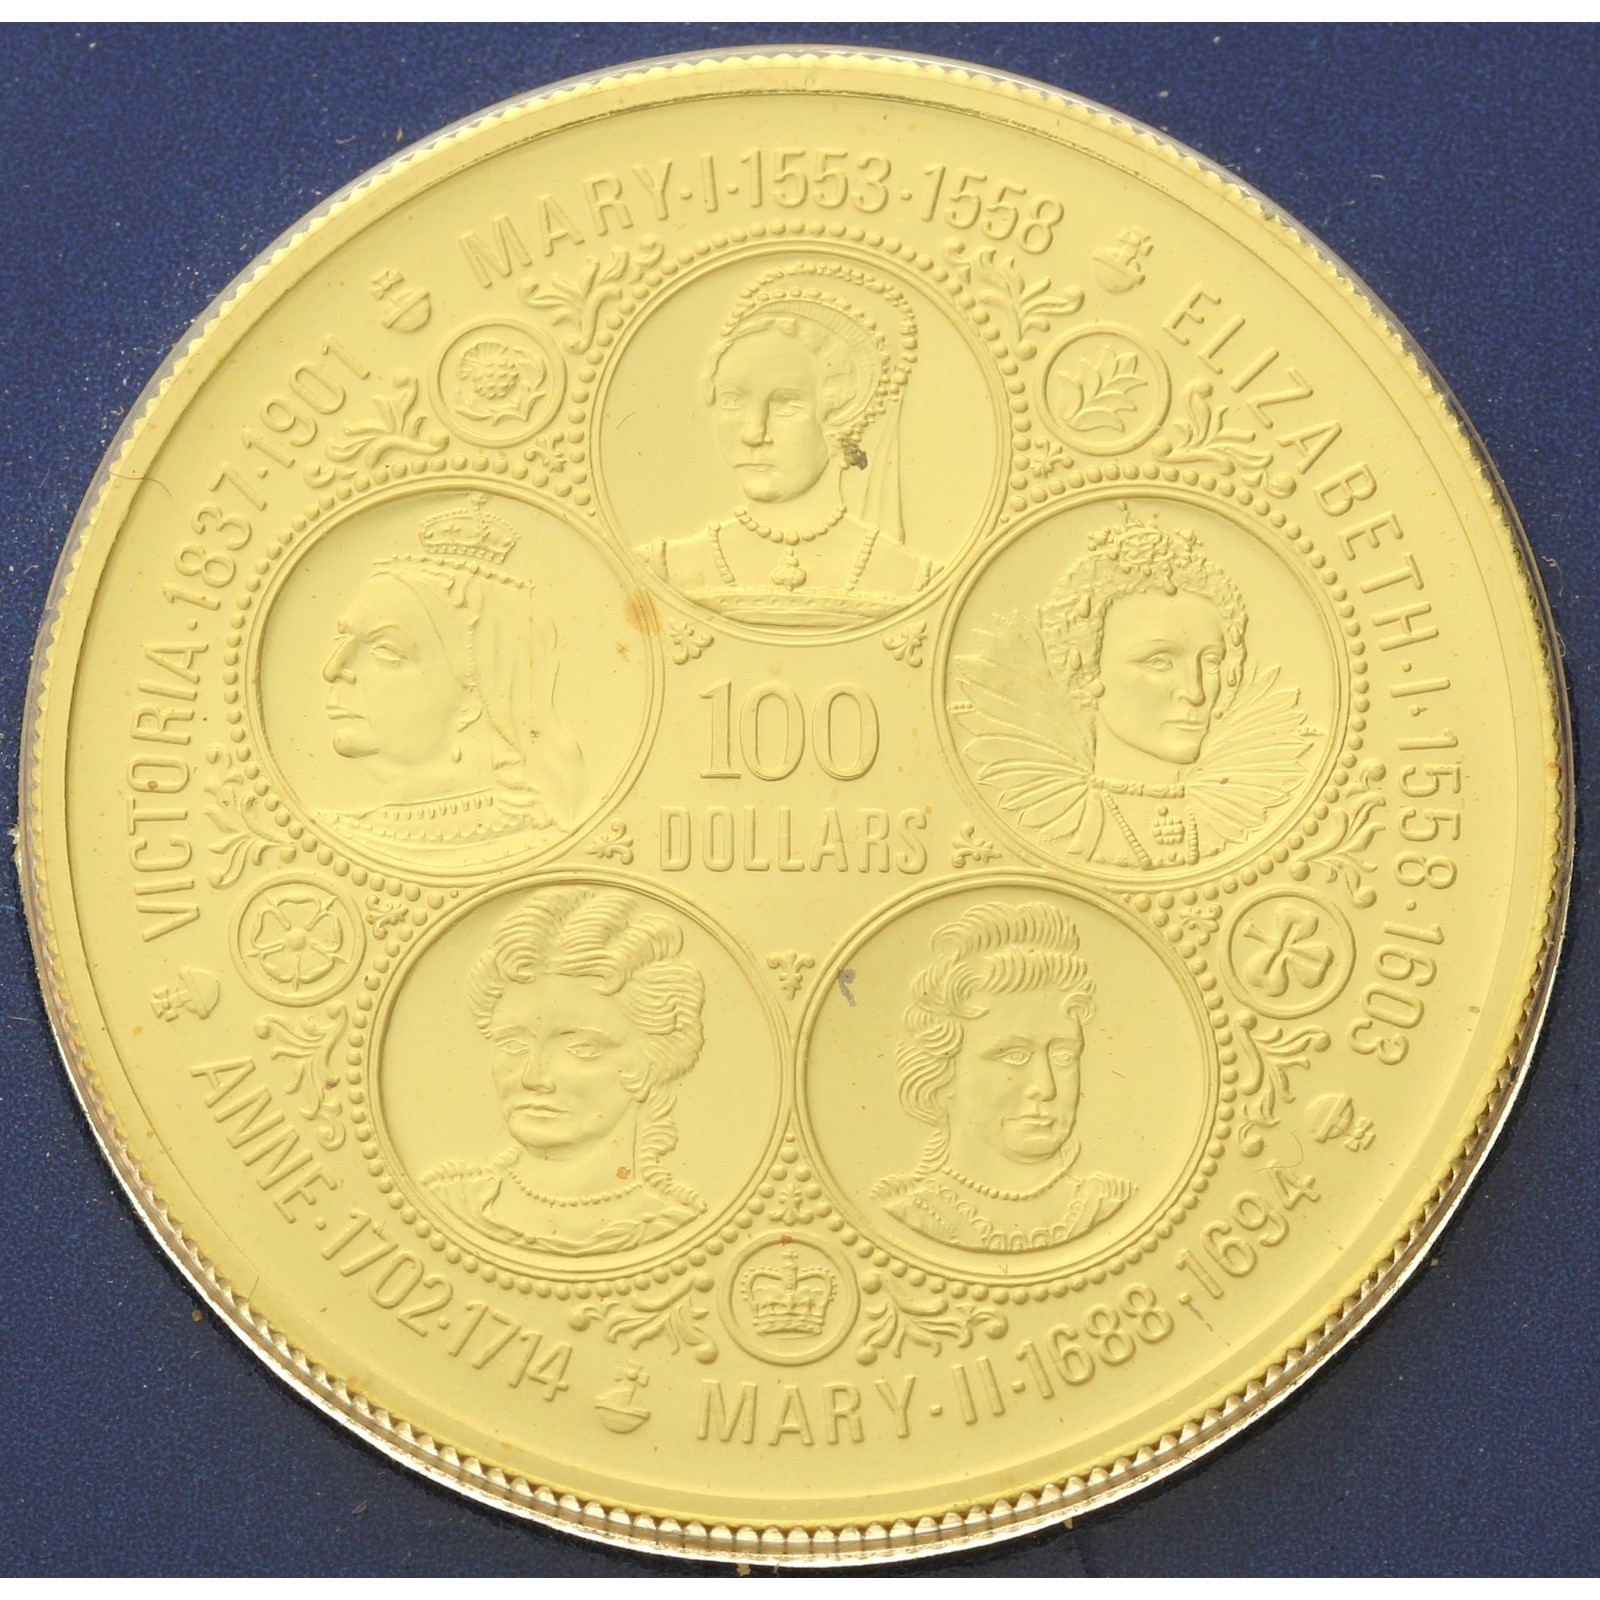 Cayman Islands - 100 dollars 1975 - Sovereign Queens of England 